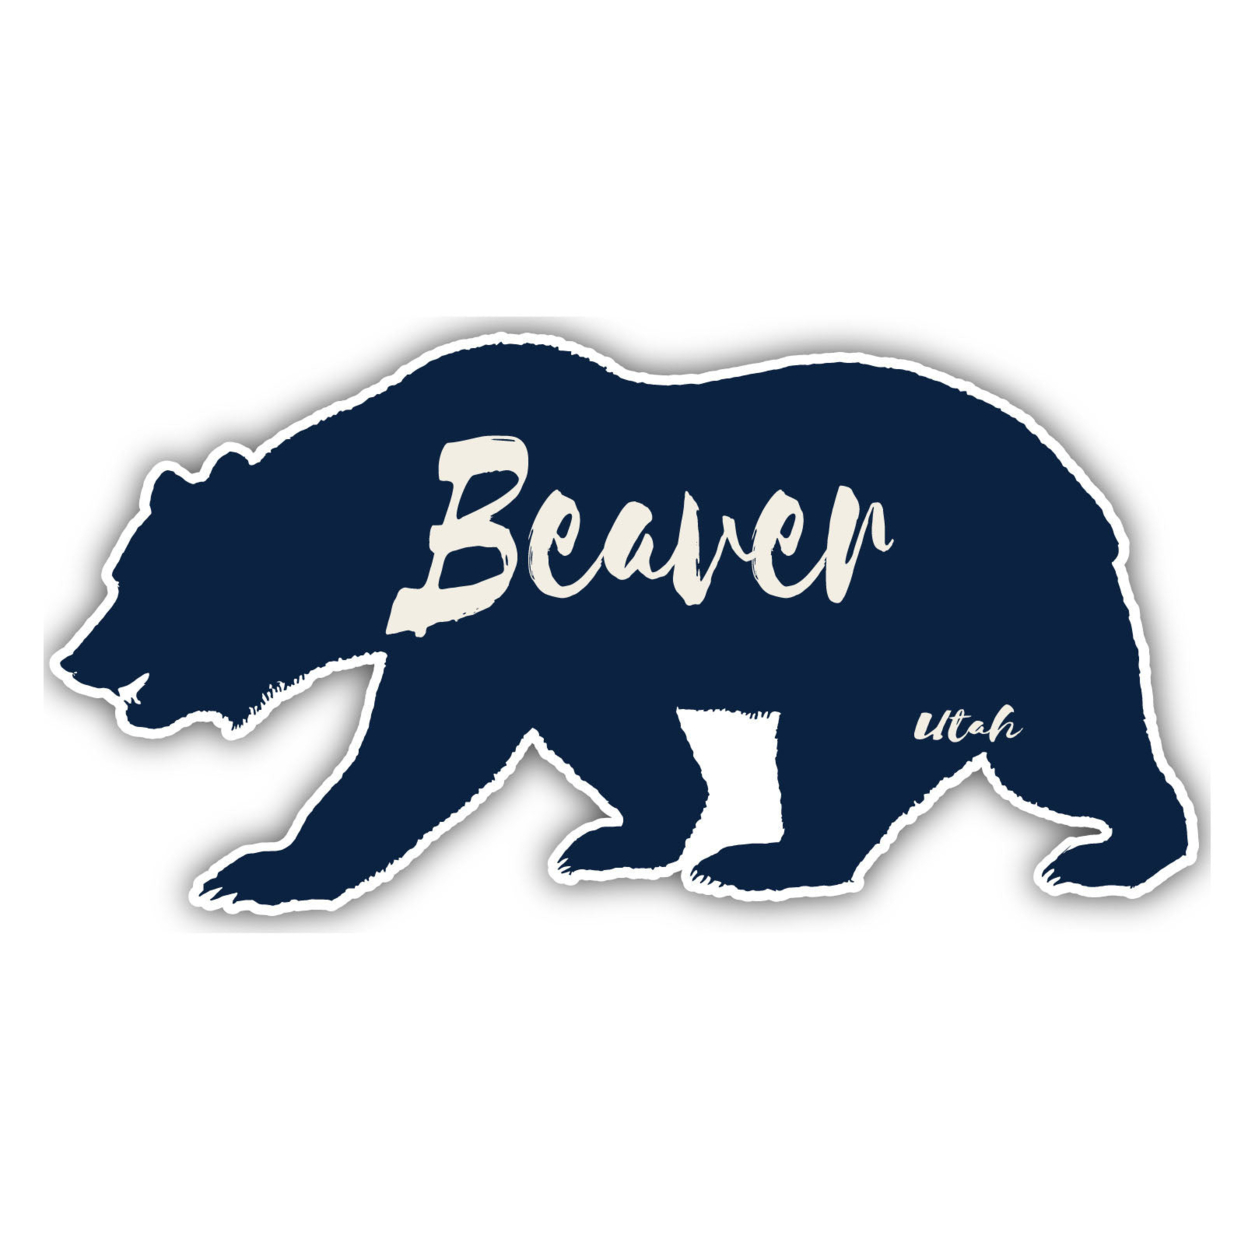 Beaver Utah Souvenir Decorative Stickers (Choose Theme And Size) - 4-Pack, 10-Inch, Bear